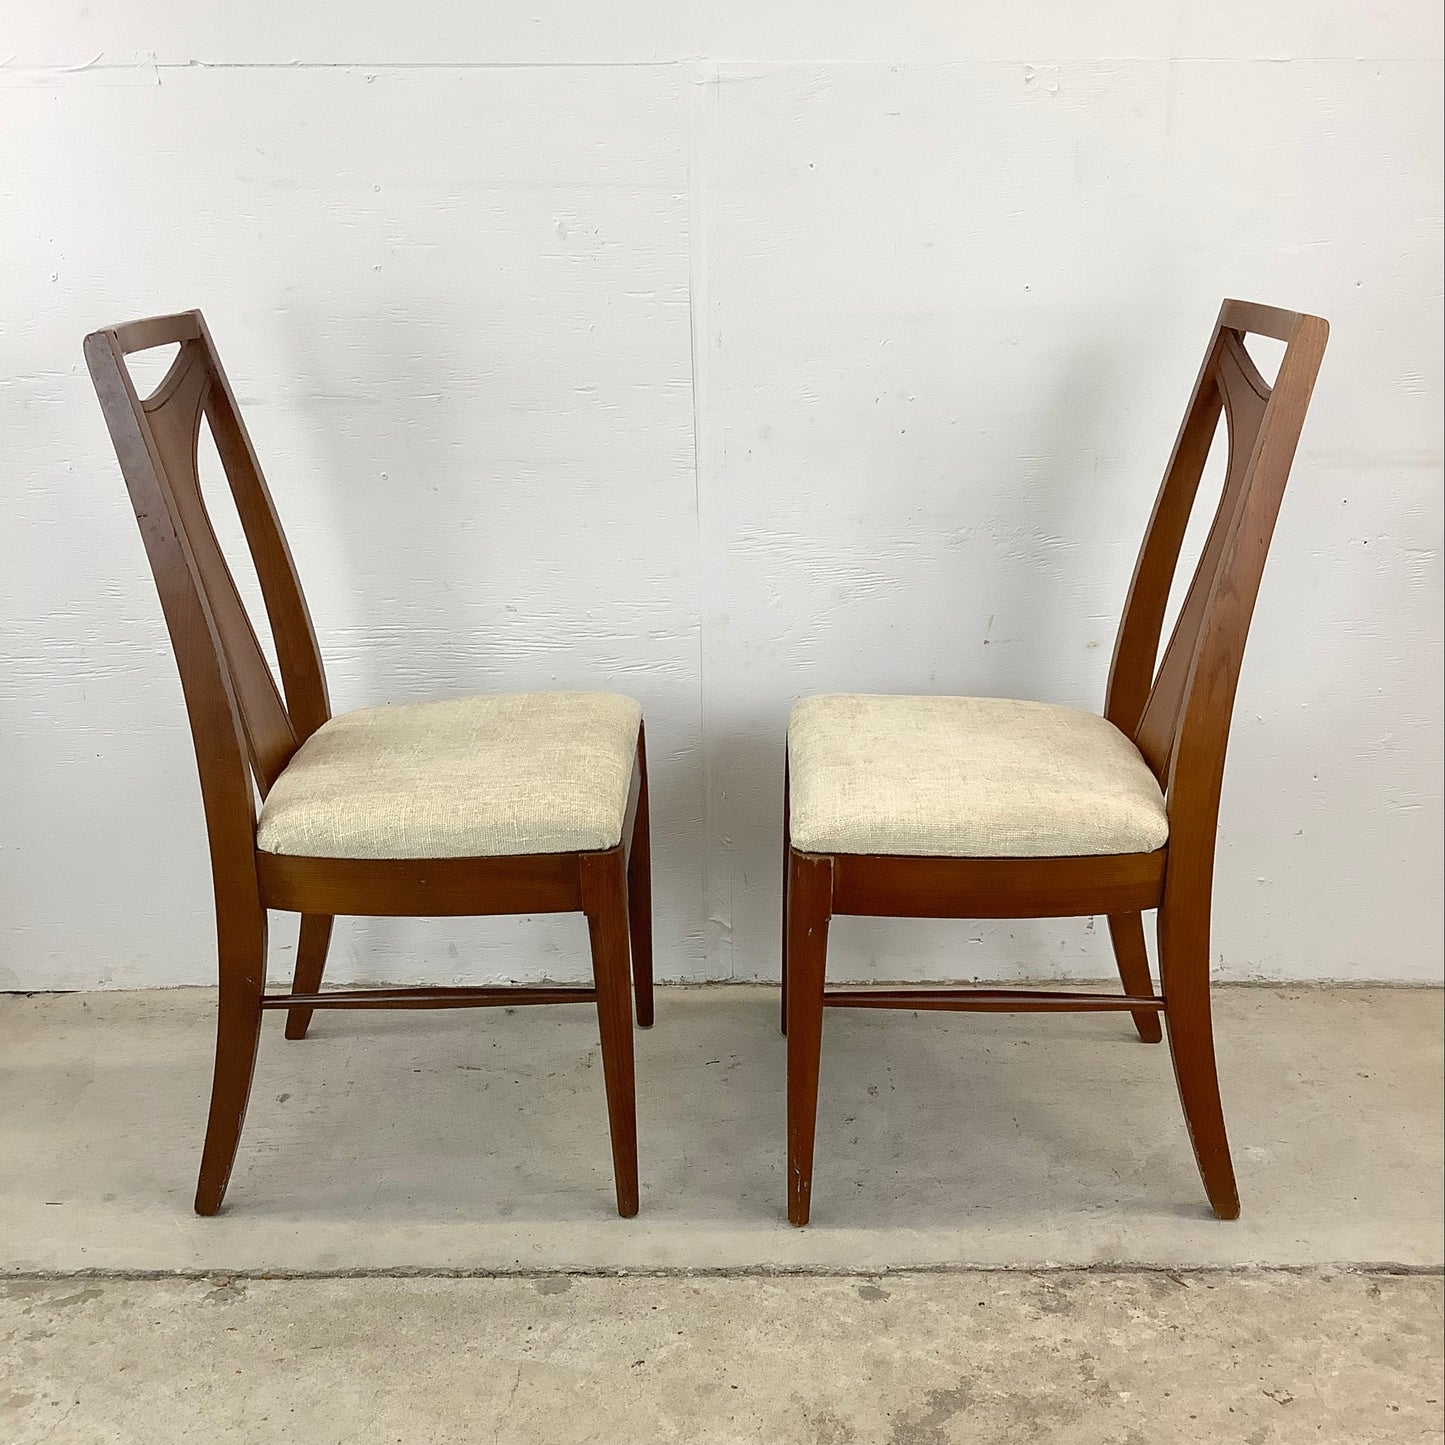 Mid-Century Walnut Dining Chairs- Six